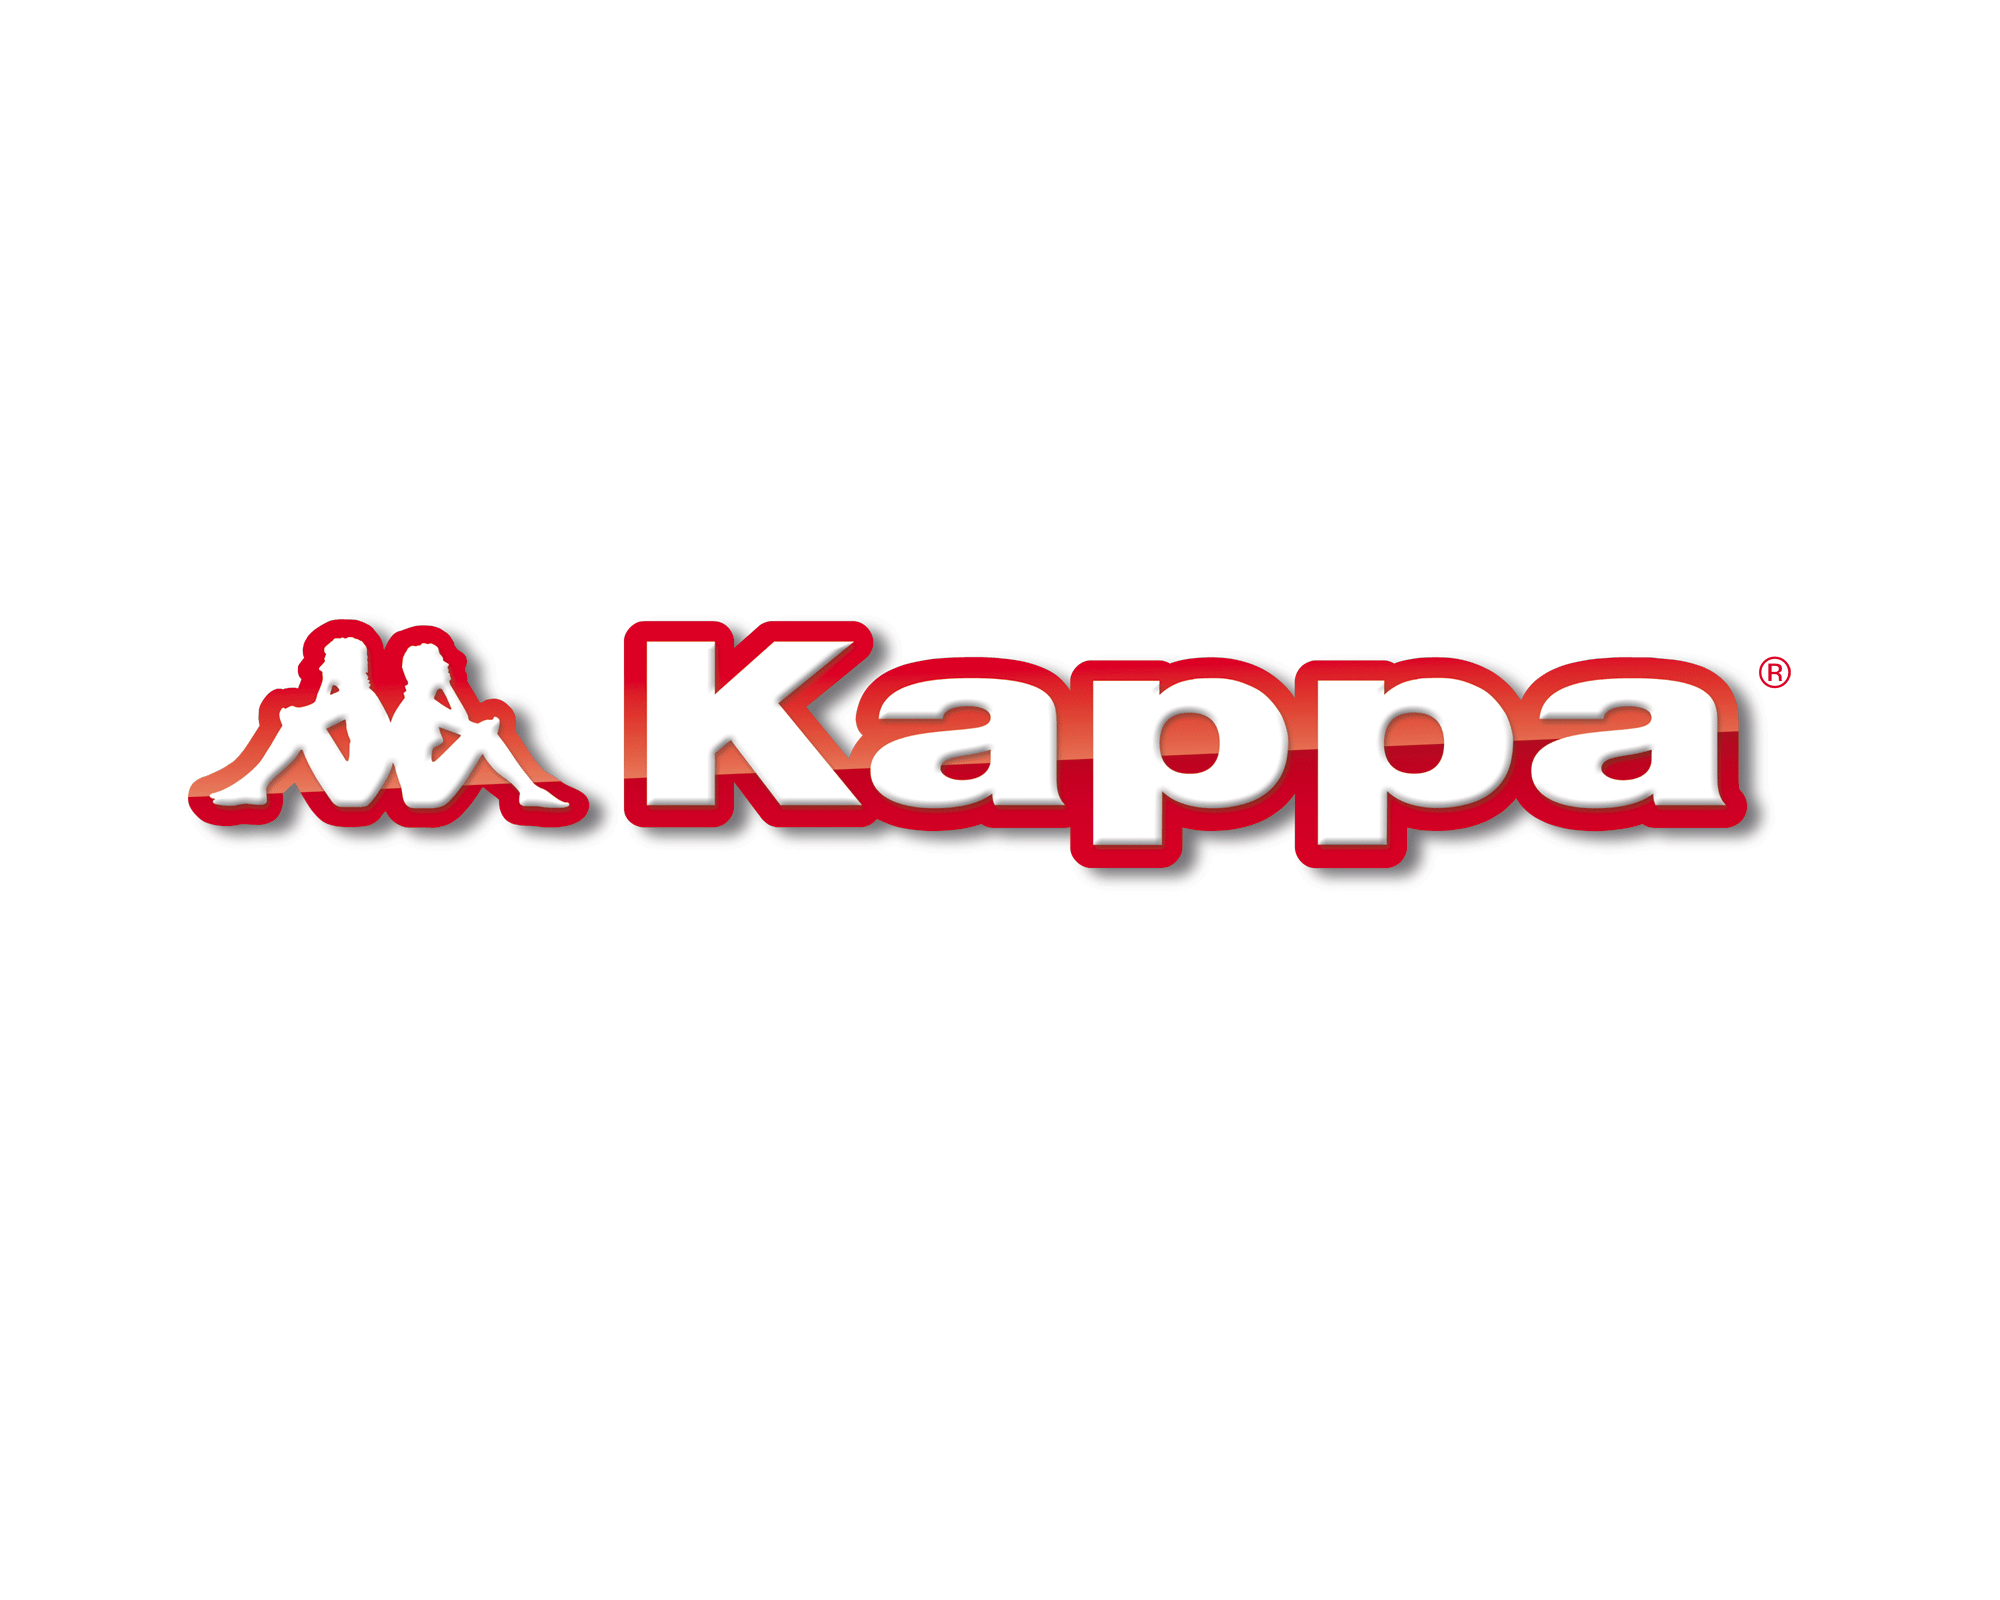 Italian Sportswear Brand Logo - Kappa logo | Logok